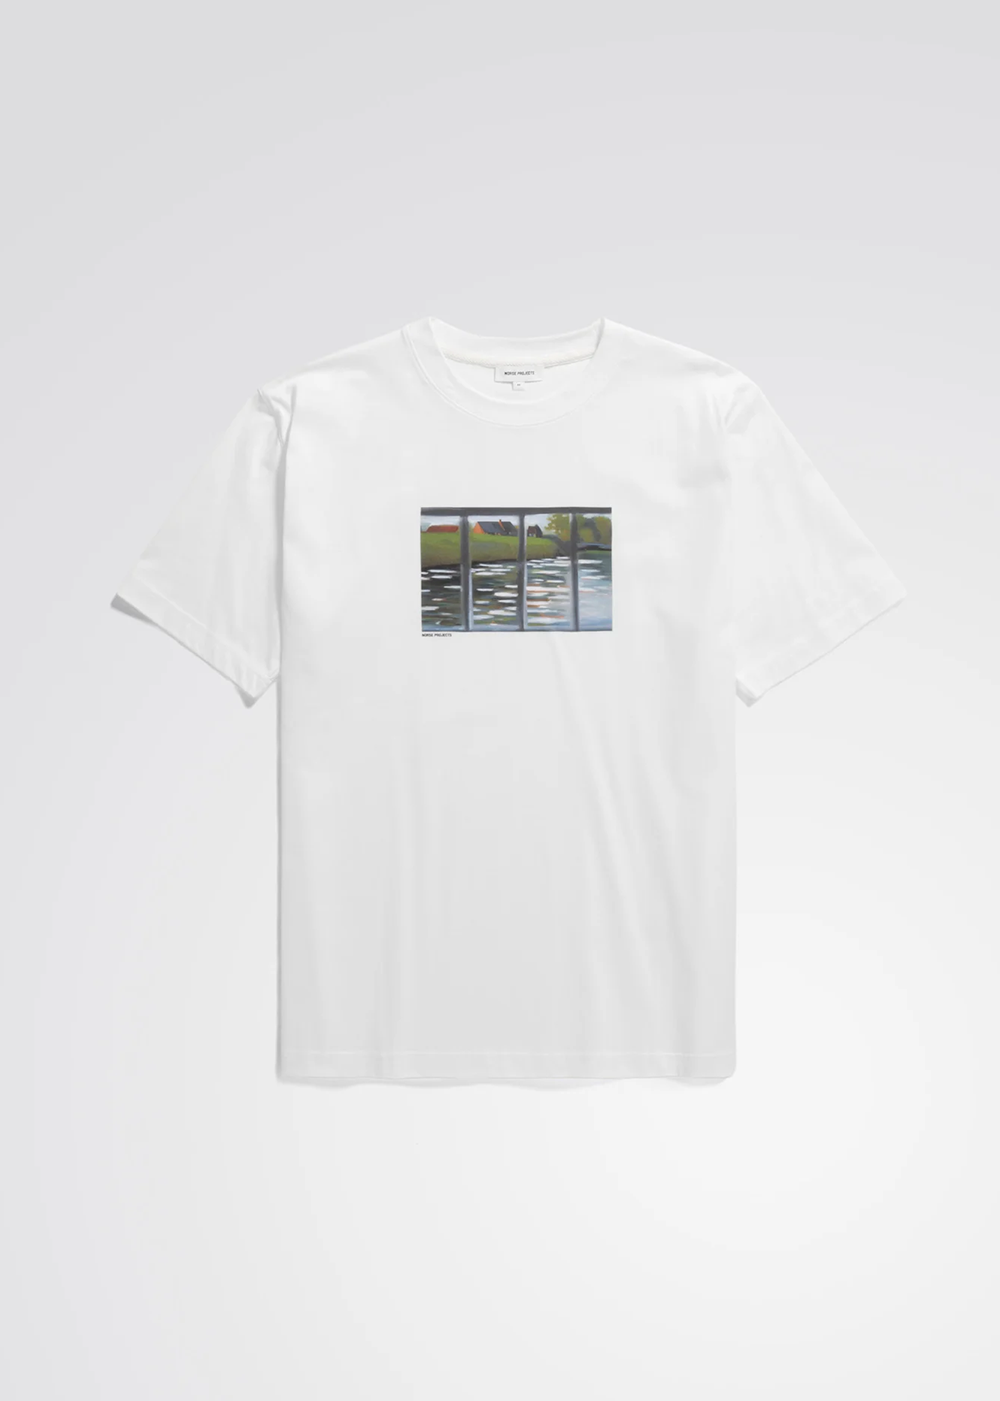 Johannes Organic Canal Print T-Shirt